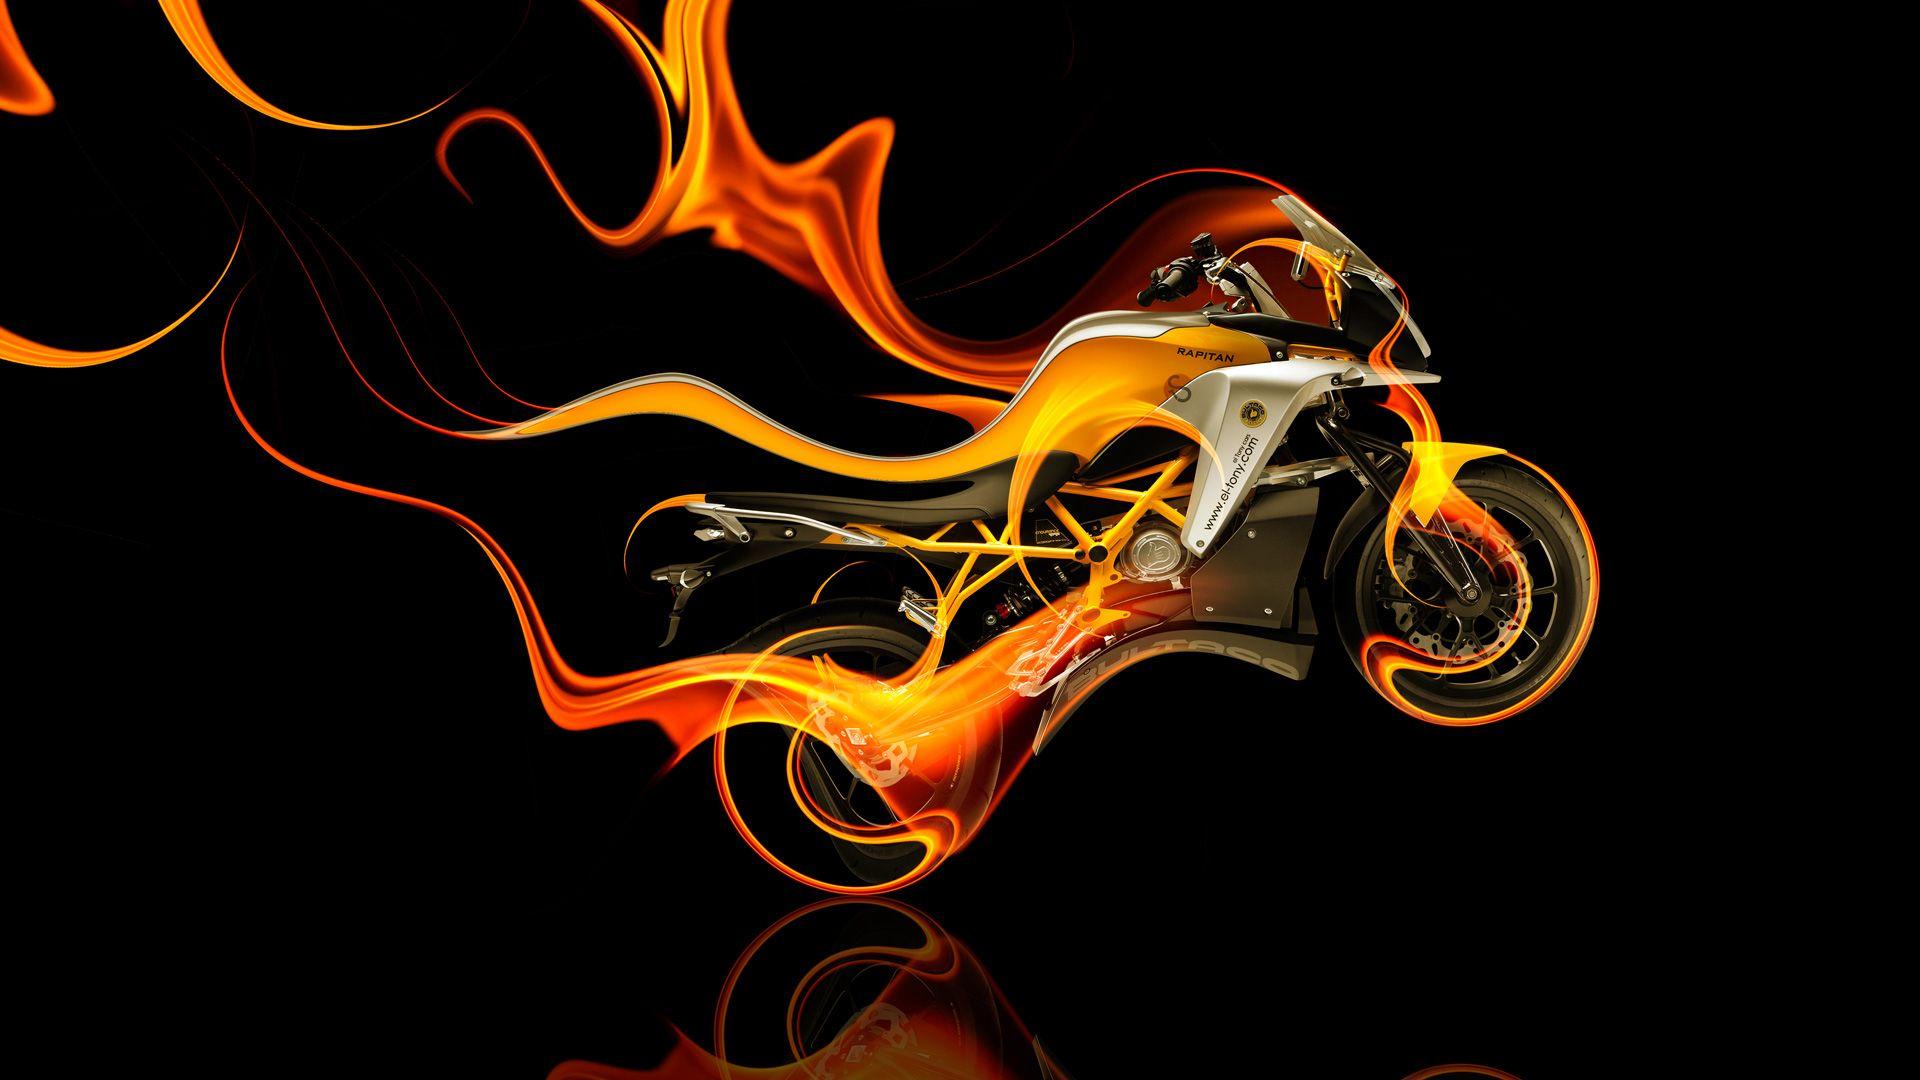 Side Flame Logo - Moto Rapitan Side Fire Abstract Bike 2014 | el Tony